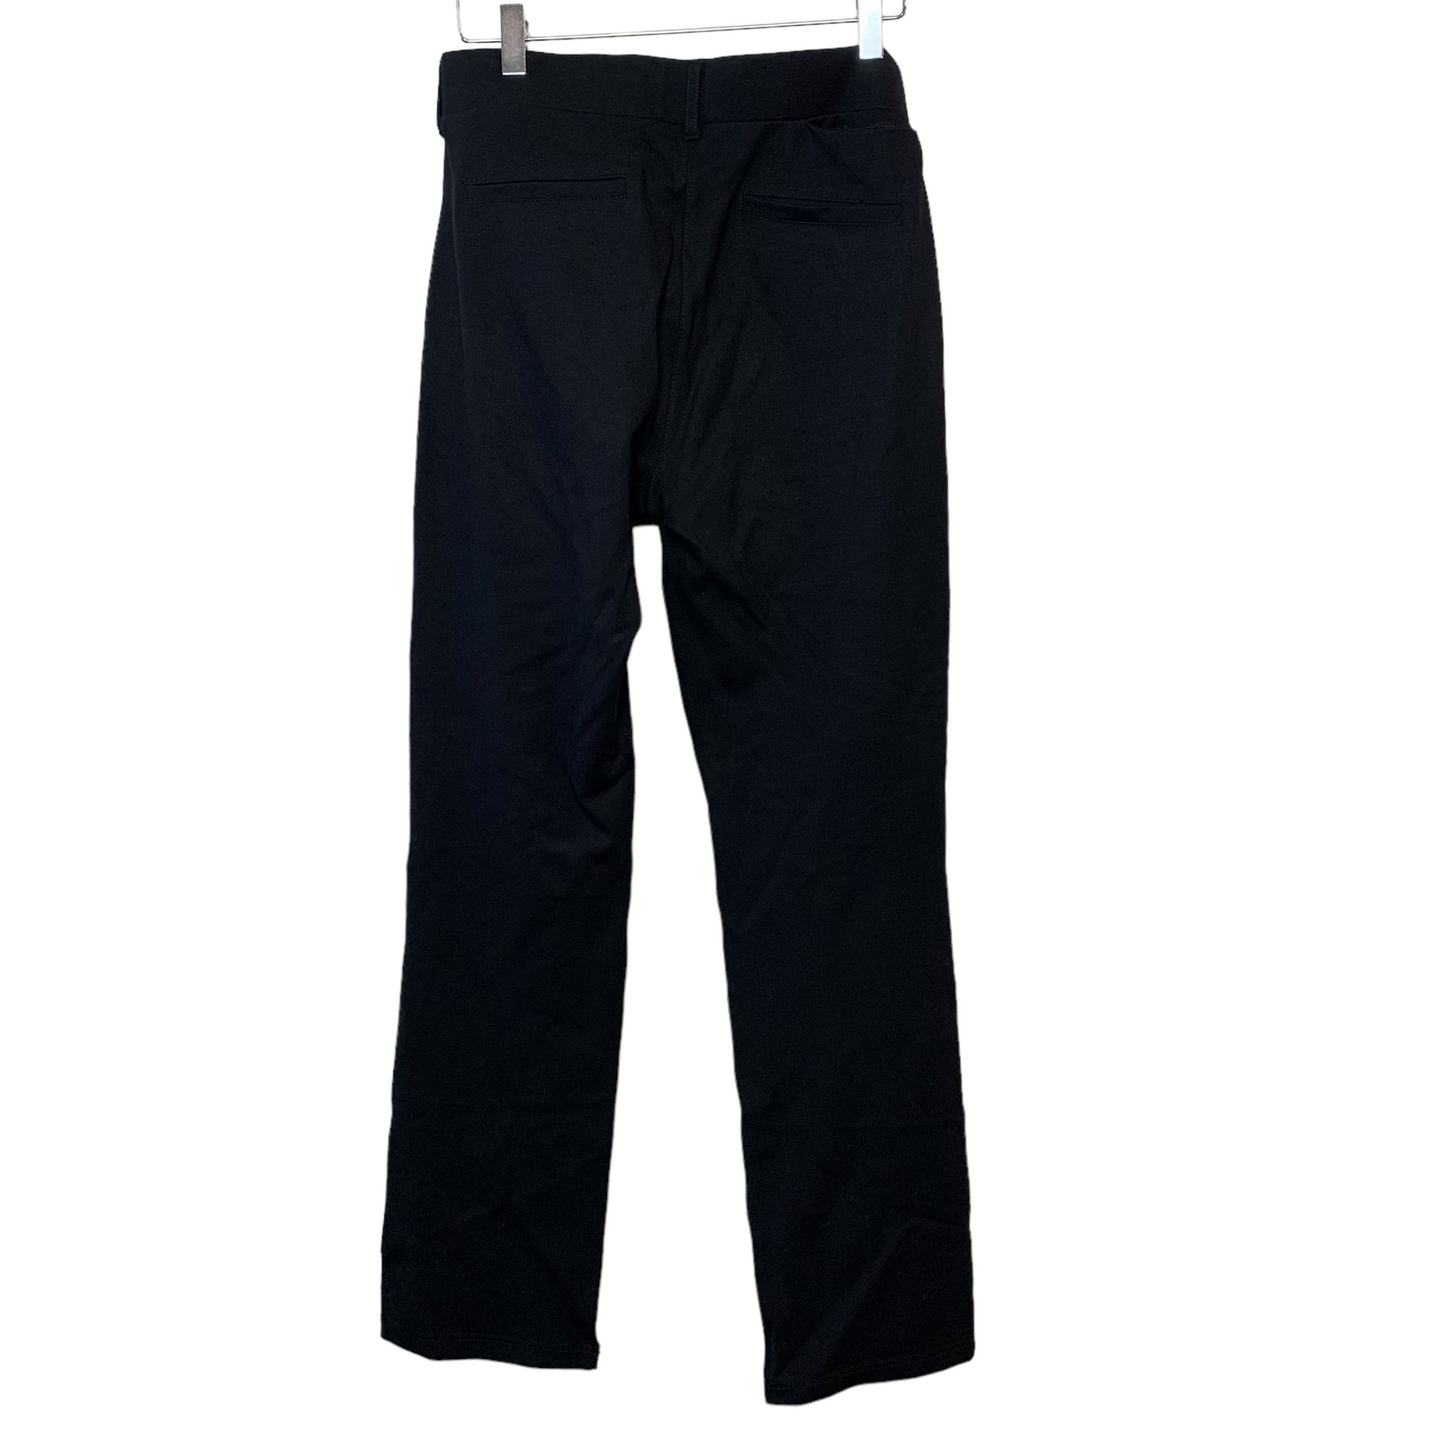 Betabrand Straight-Leg 7-Pocket Dress Pant Yoga Pants Black Medium